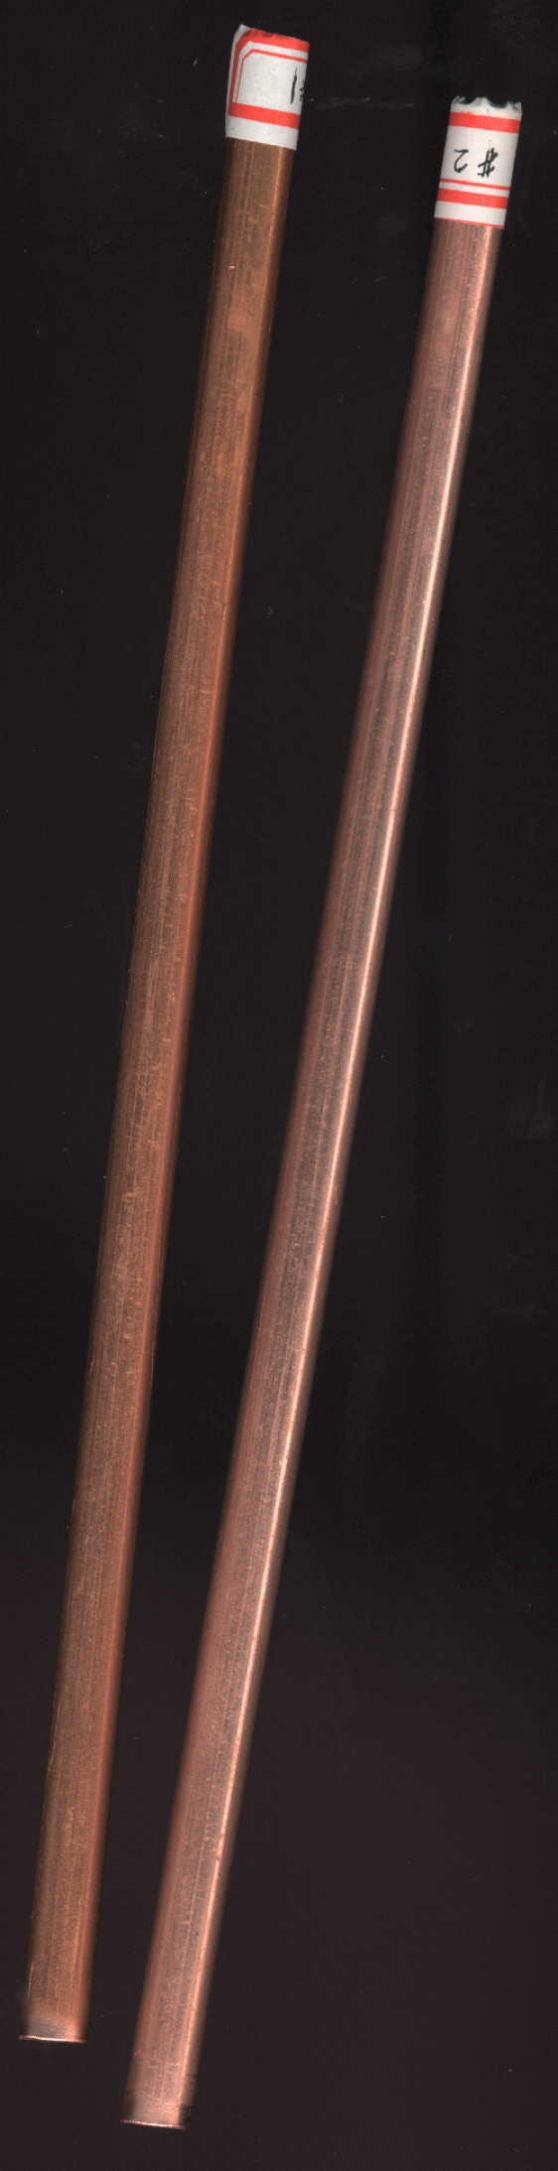 Copper Tubing samples